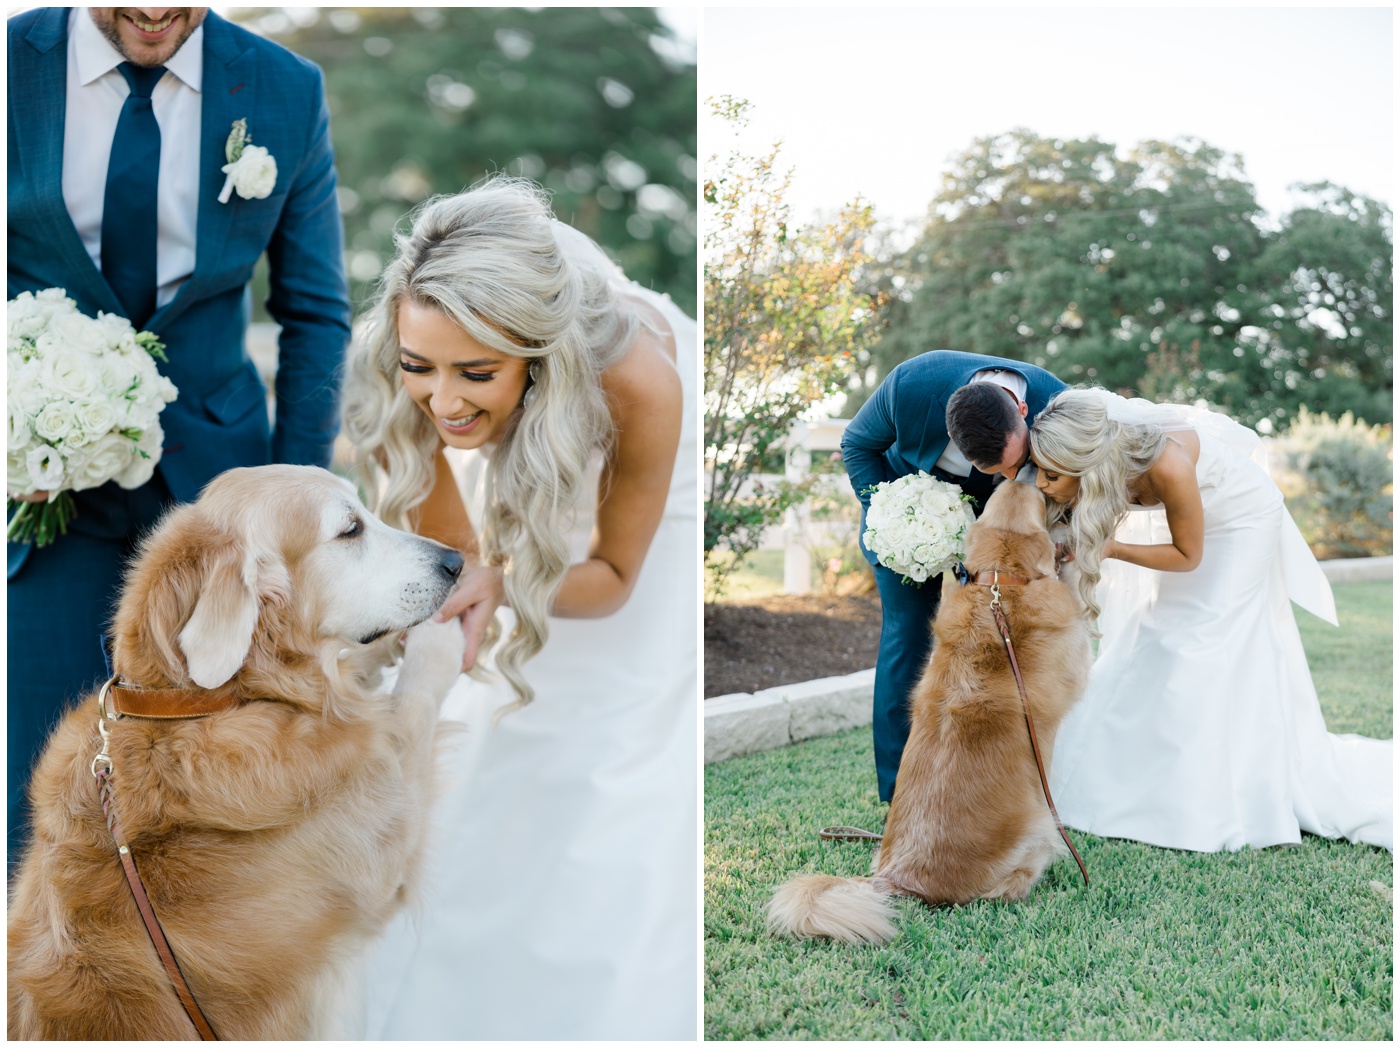 Houston Wedding Photographer | Bride and groom portraits with their dog